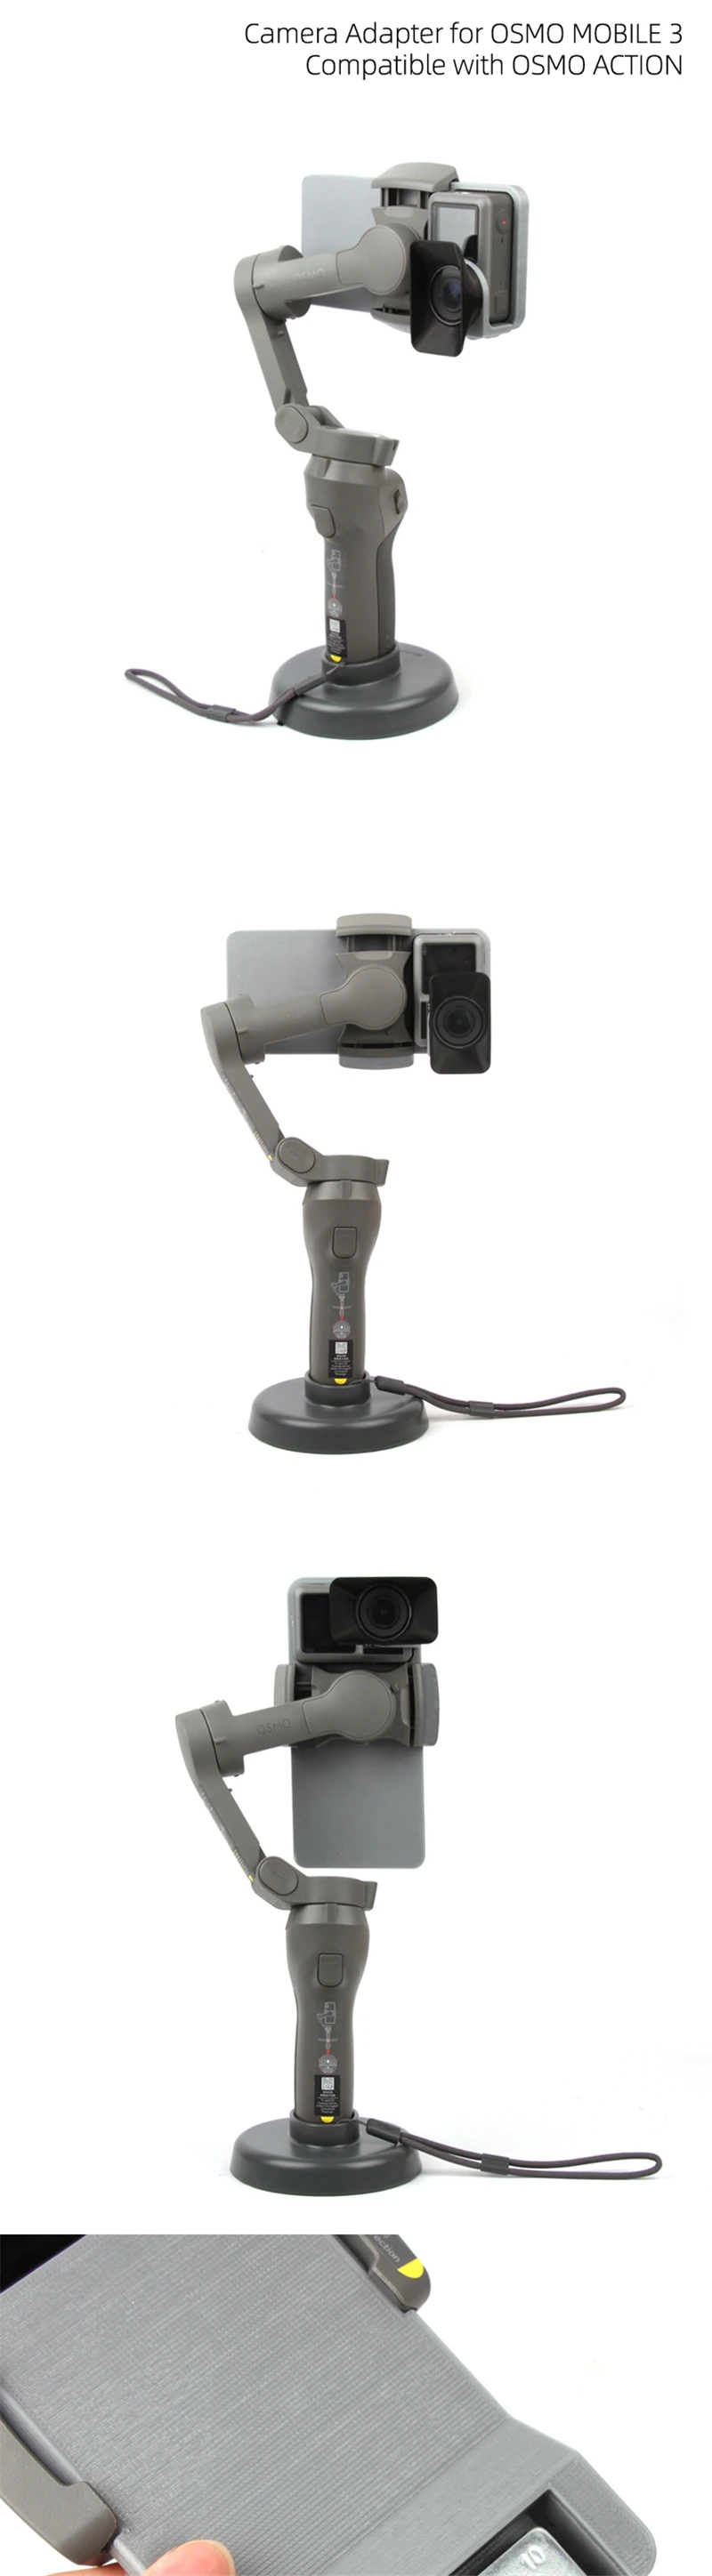 Адаптер держатель для OSMO MOBILE 3 и OSMO ACTION Sport camera